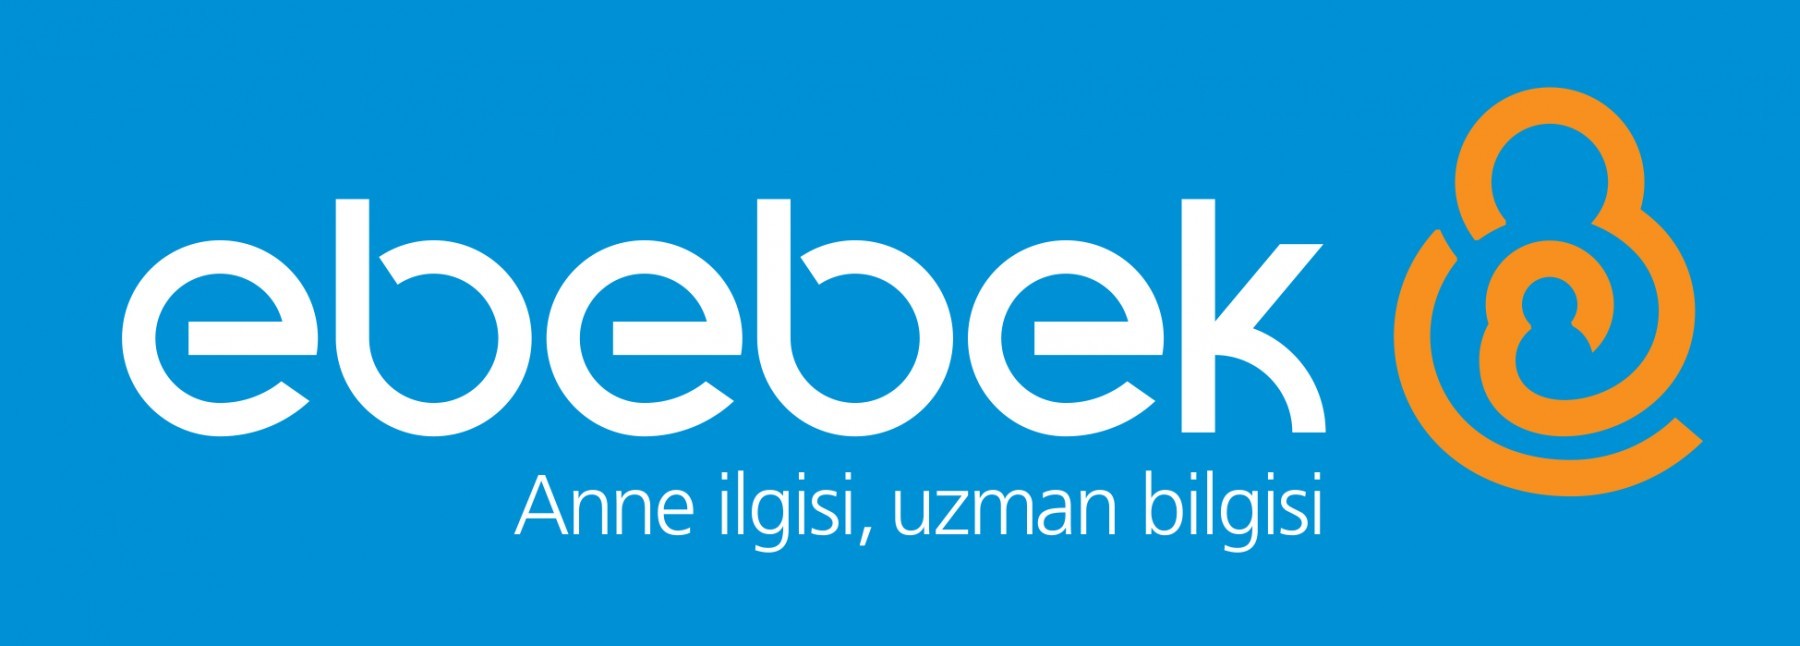 Ebebek Net 60 Indirim Kampanyasi